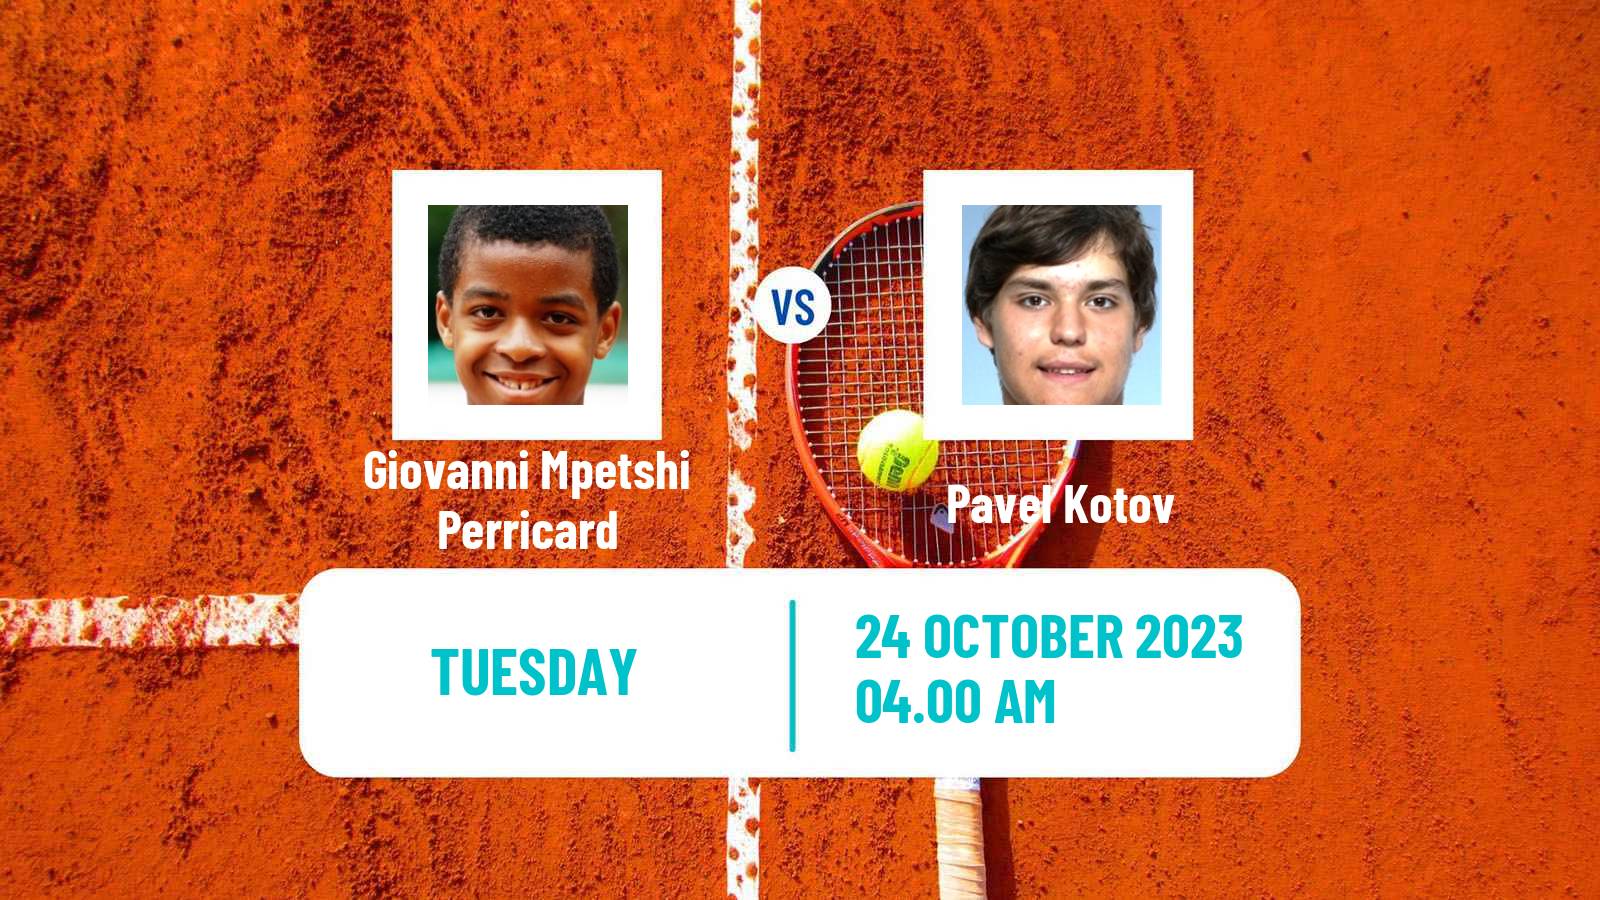 Tennis Brest Challenger Men 2023 Giovanni Mpetshi Perricard - Pavel Kotov